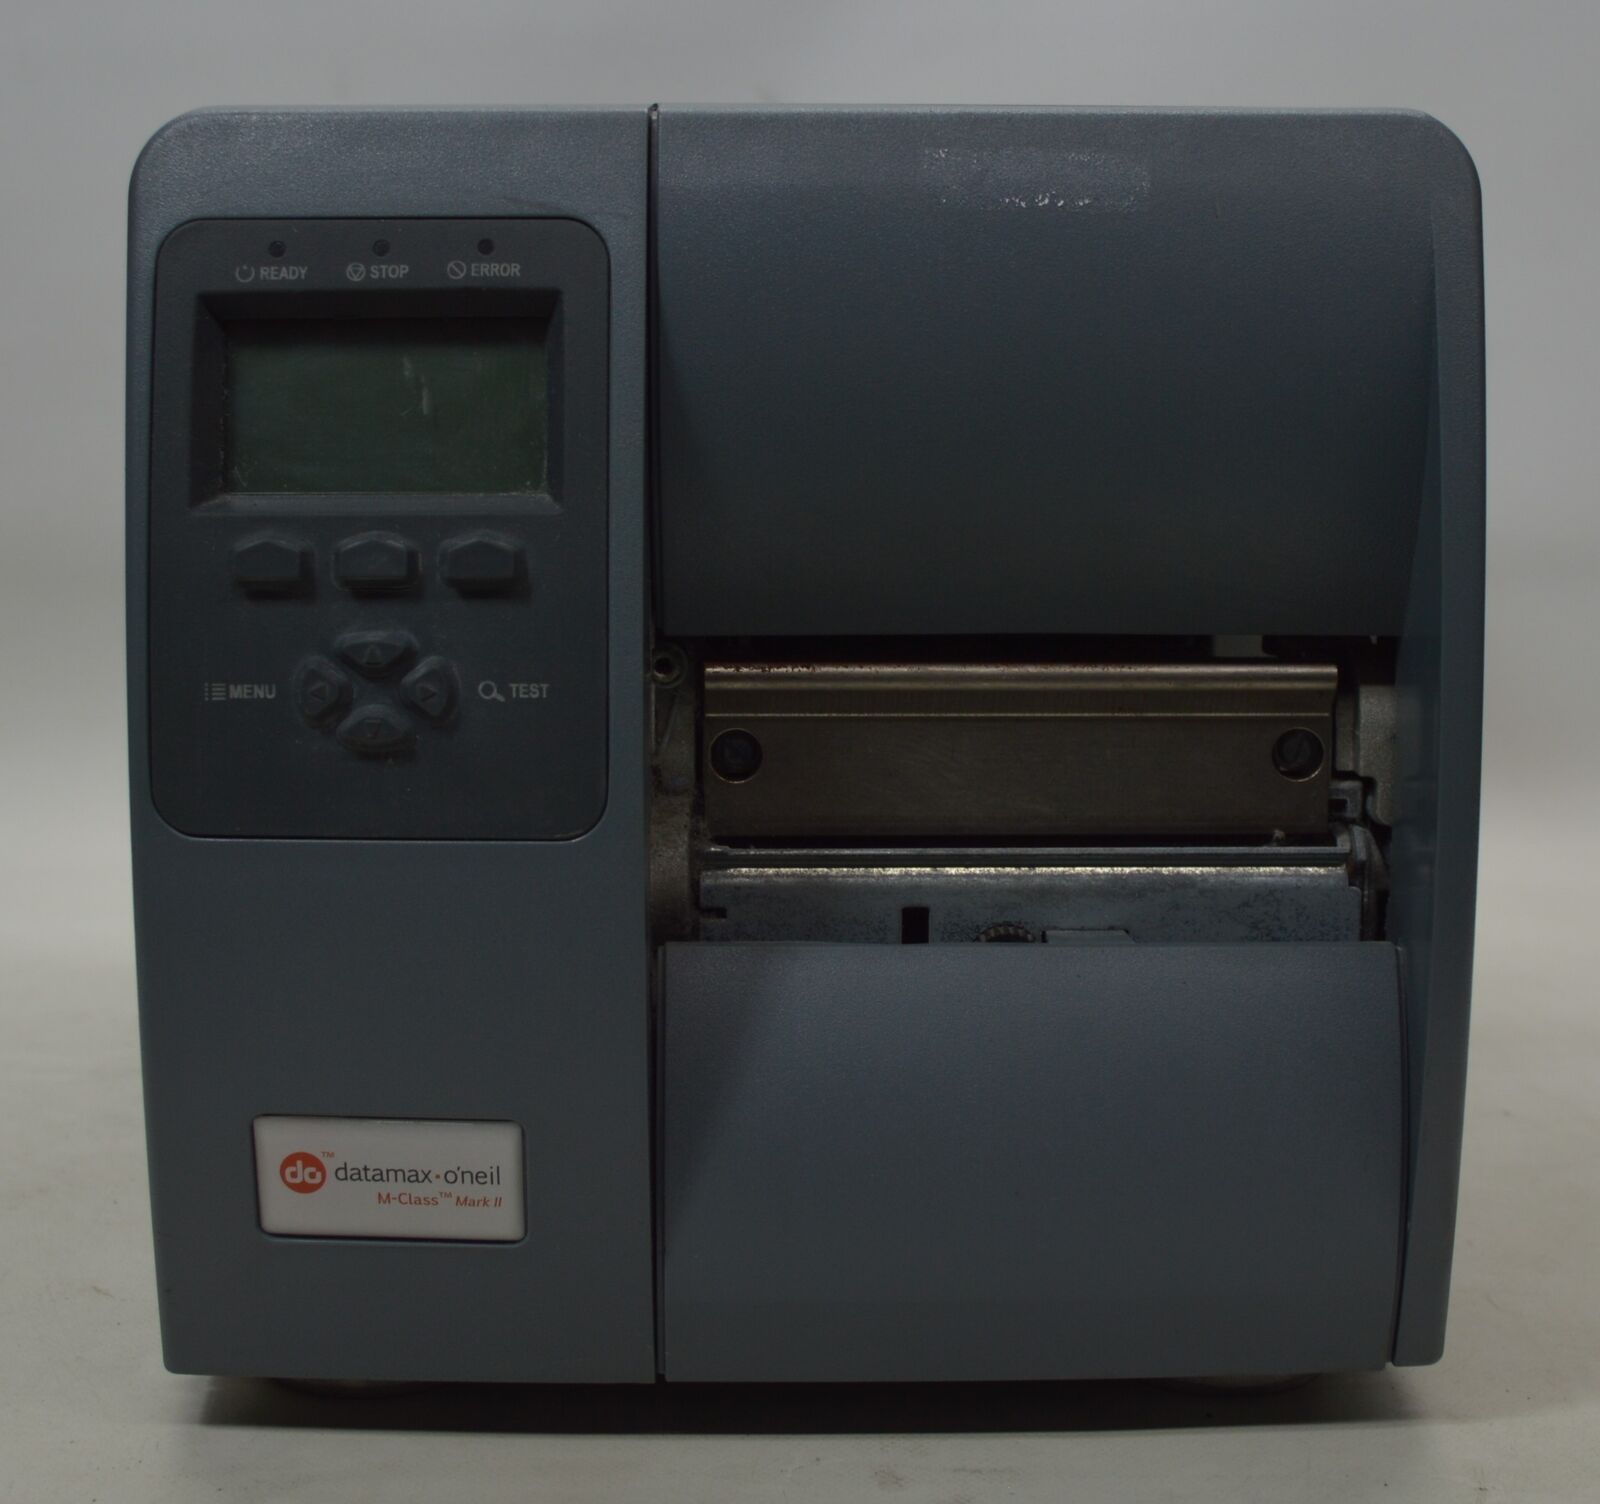 Datamax O'Neil Industrial Label Printer M-Class Mark II DMX-M-4206